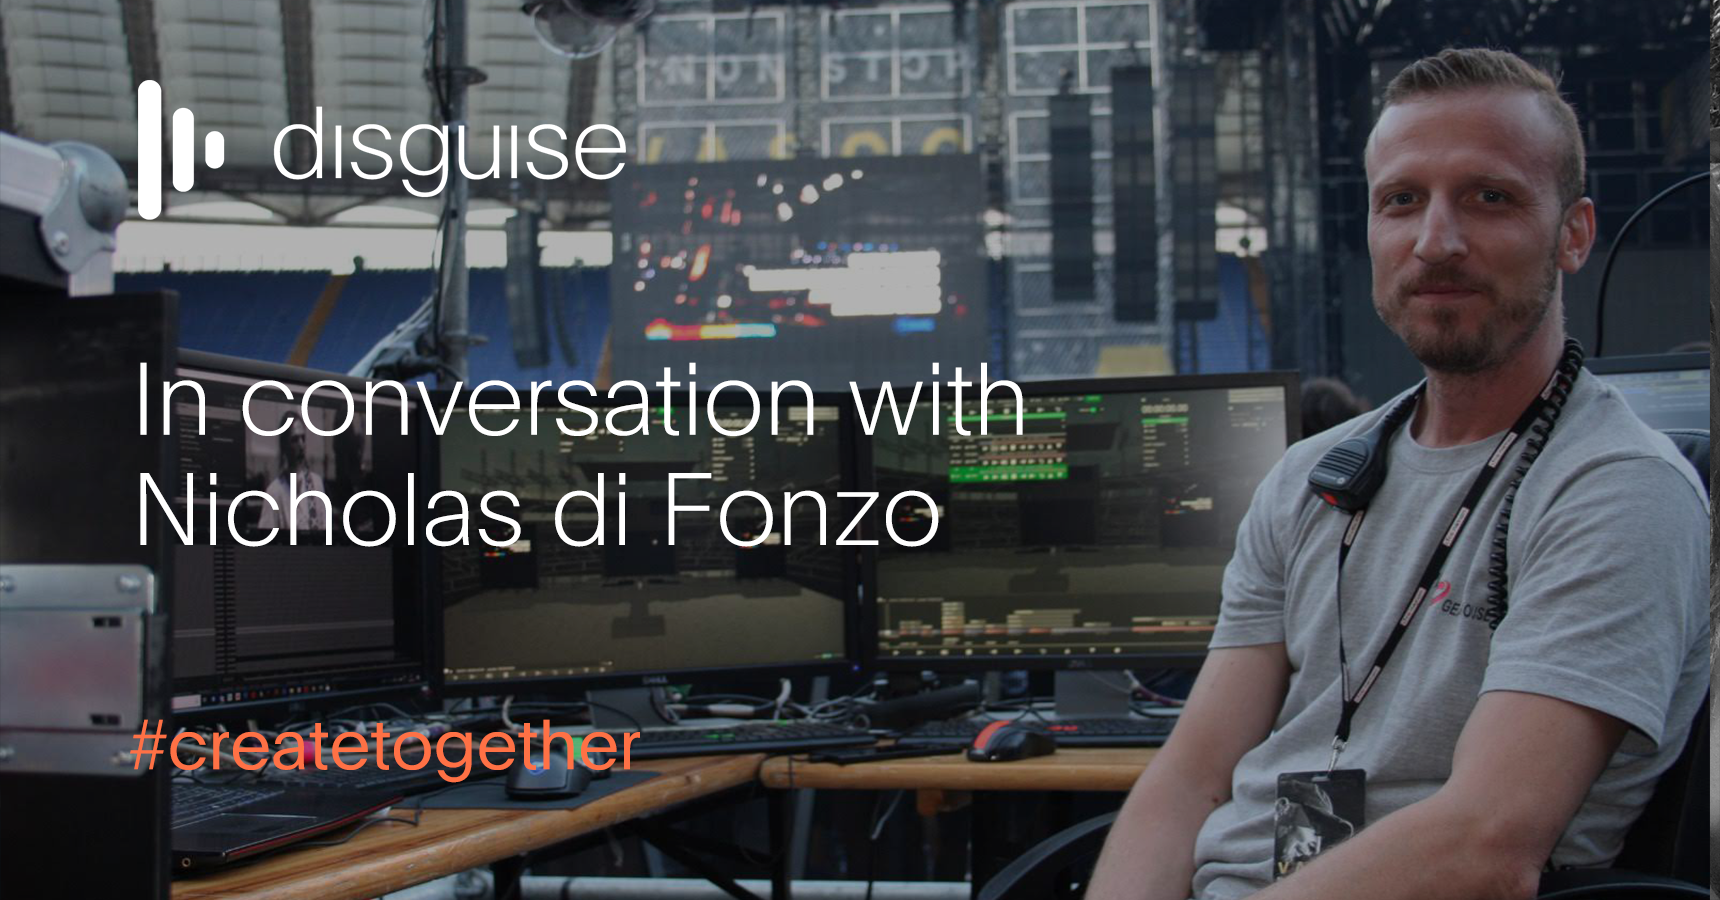 In conversation with Nicholas di Fonzo